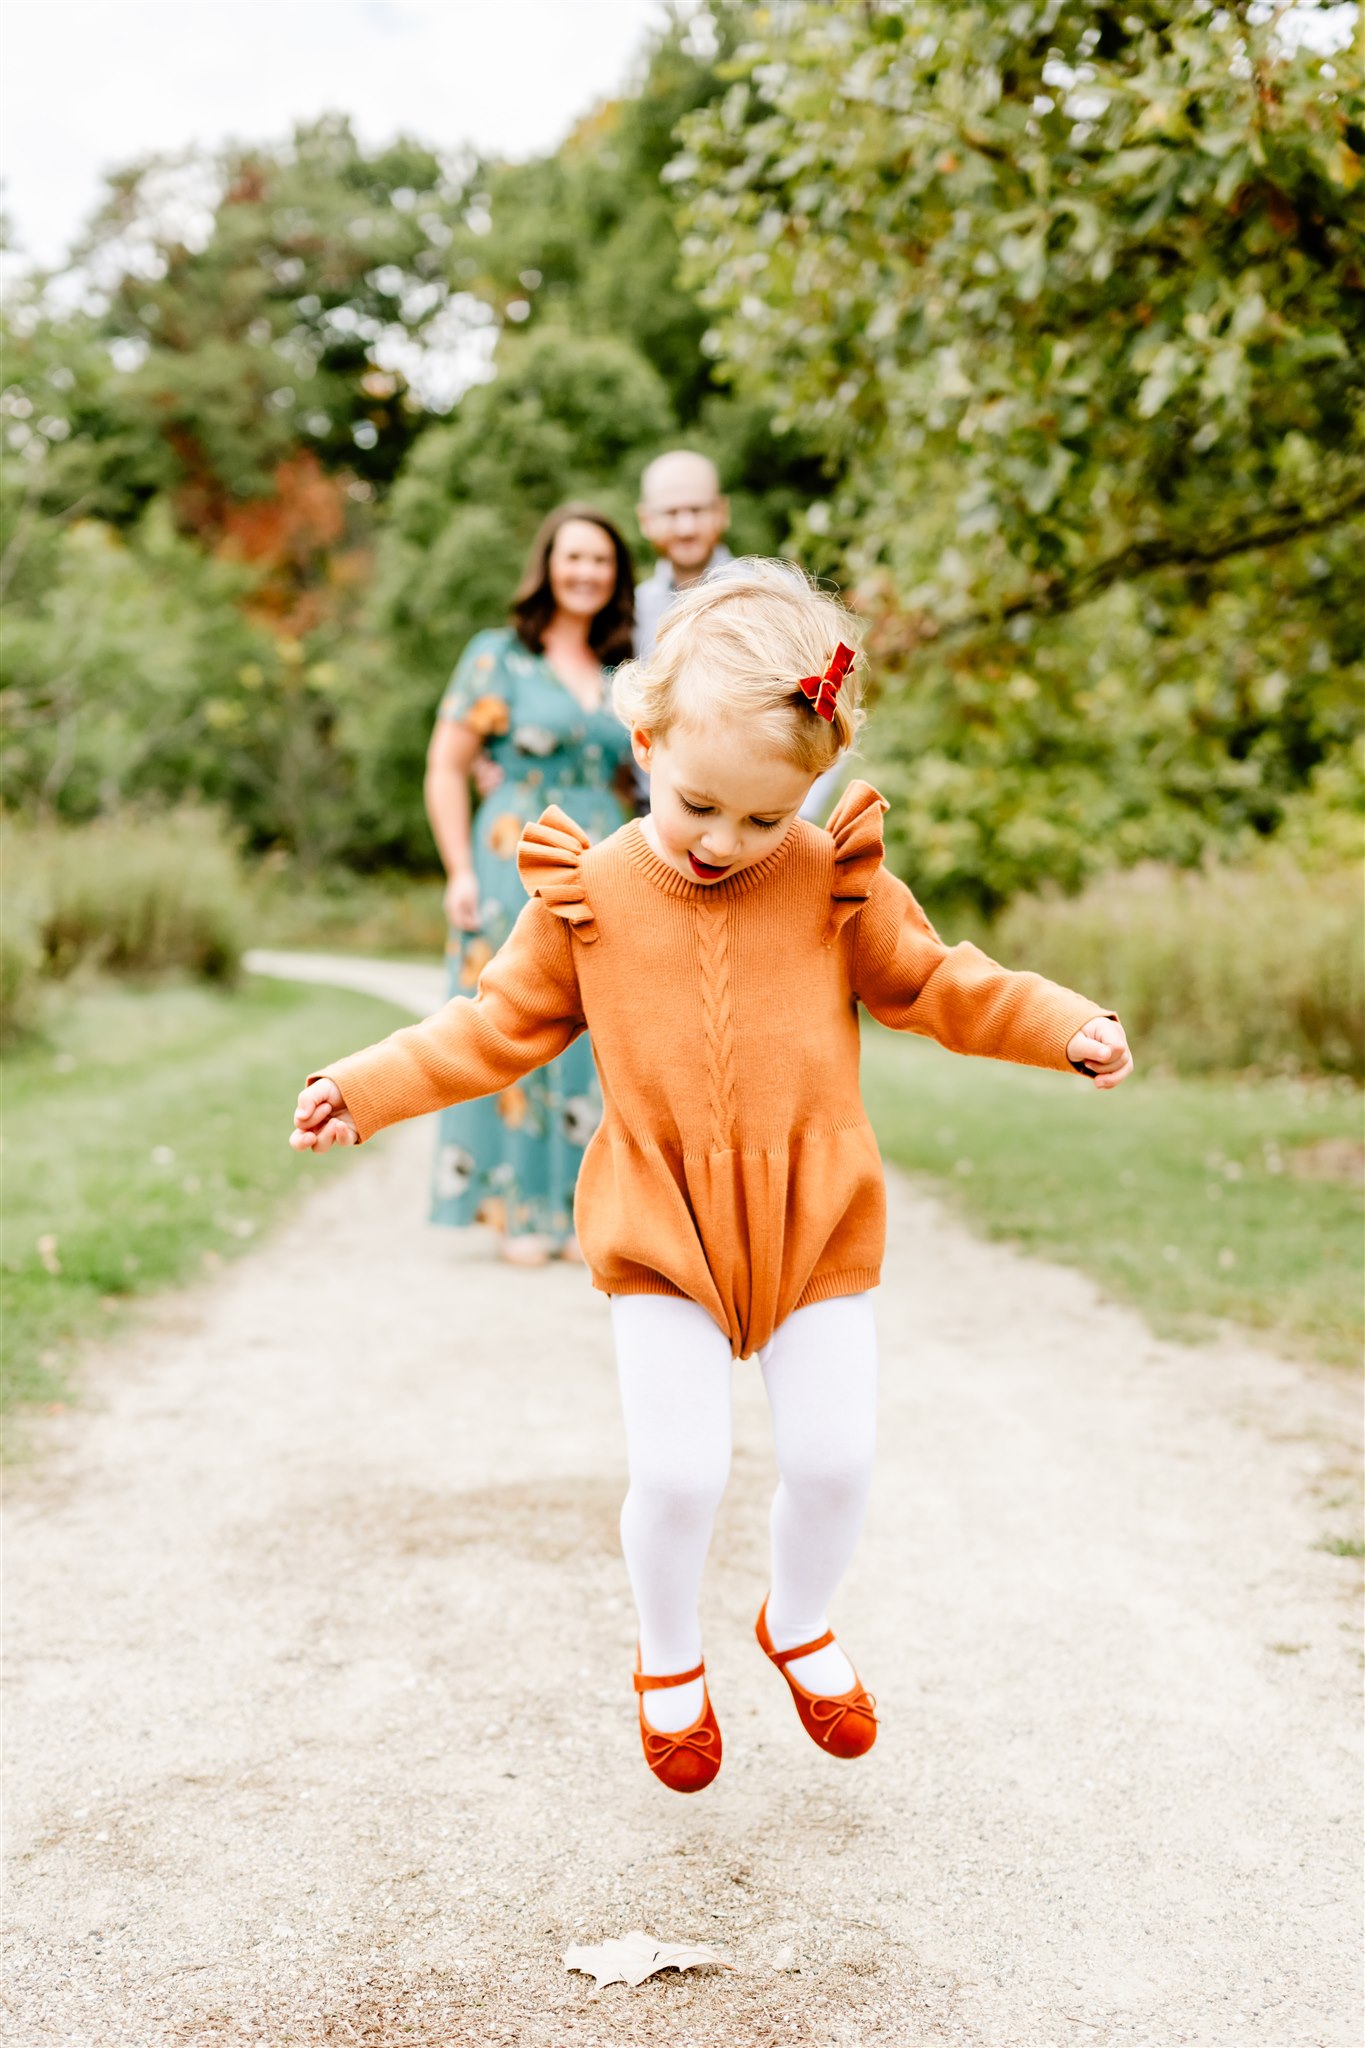 A toddler girl in an orange dress jump in a park path